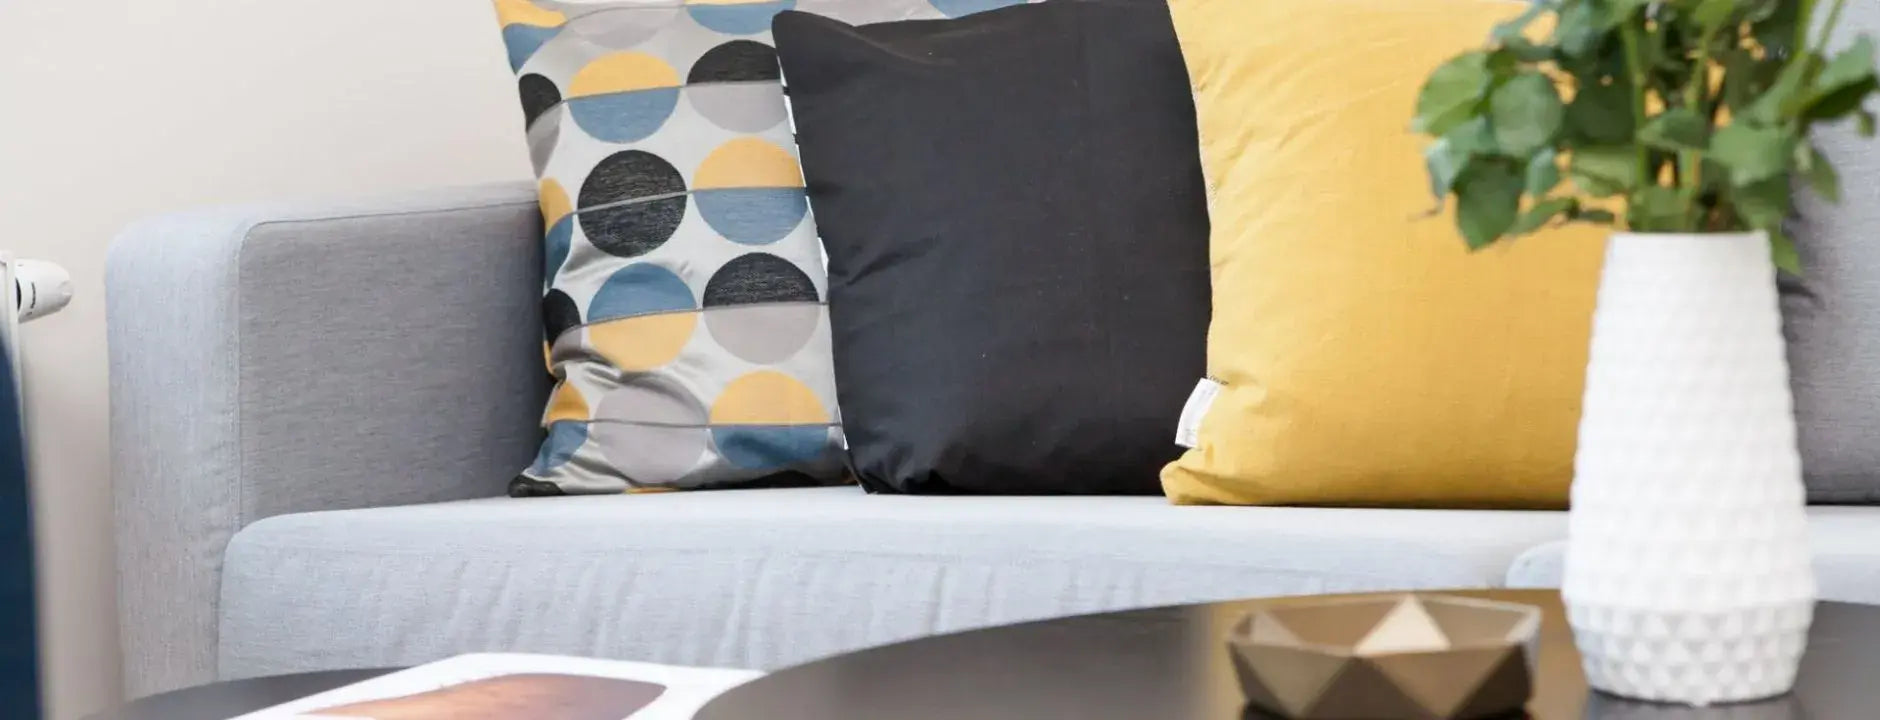 moderne grijze bank met gele kussens en houten tafel in woonkamer.